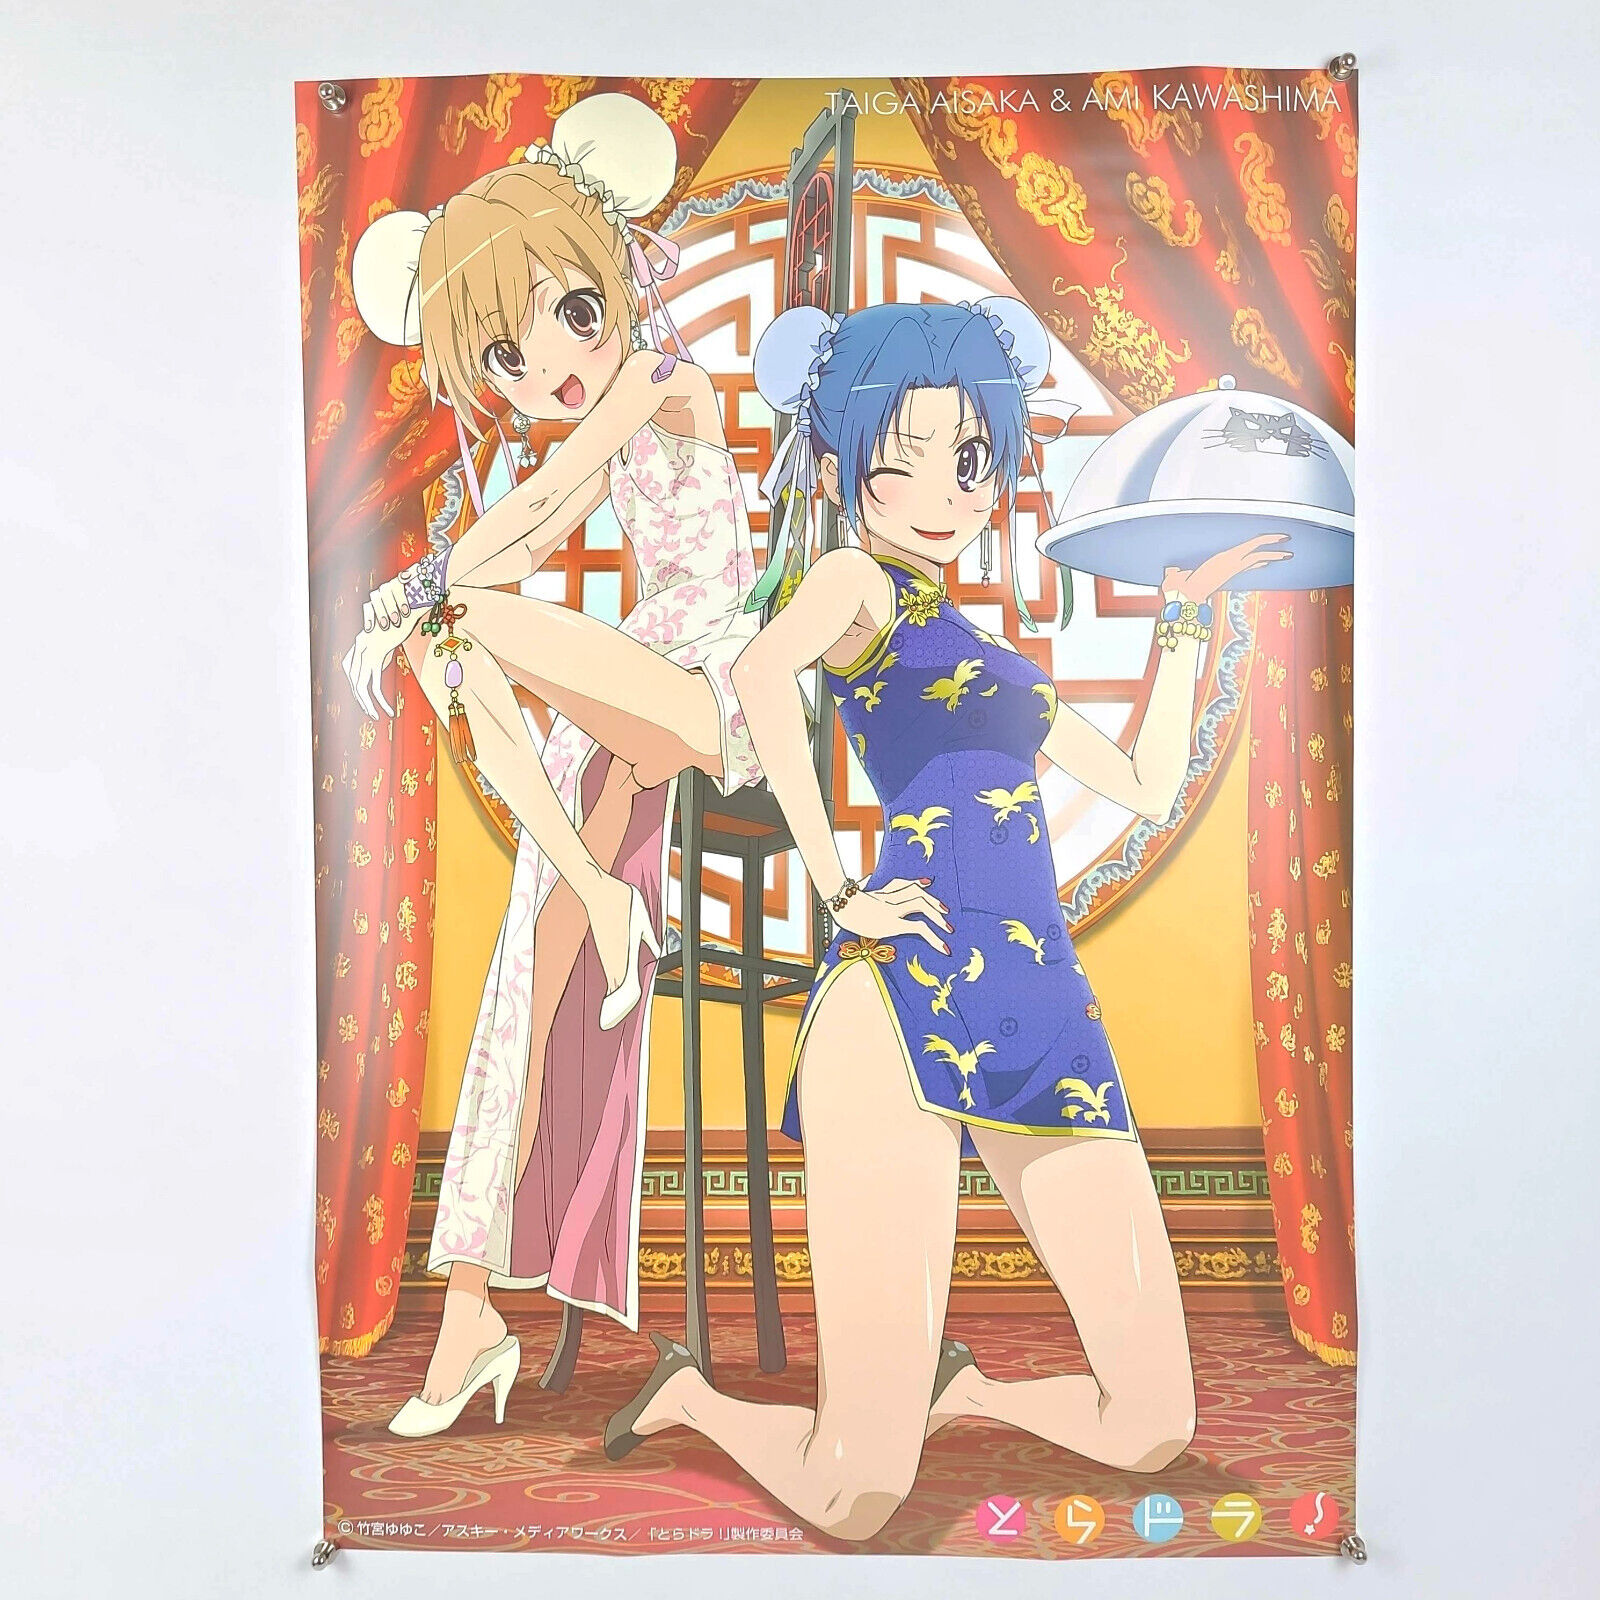 Toradora B2 Anime Bath Poster Taiga Aisaka Ami Kawashima China Dress - US SELLER